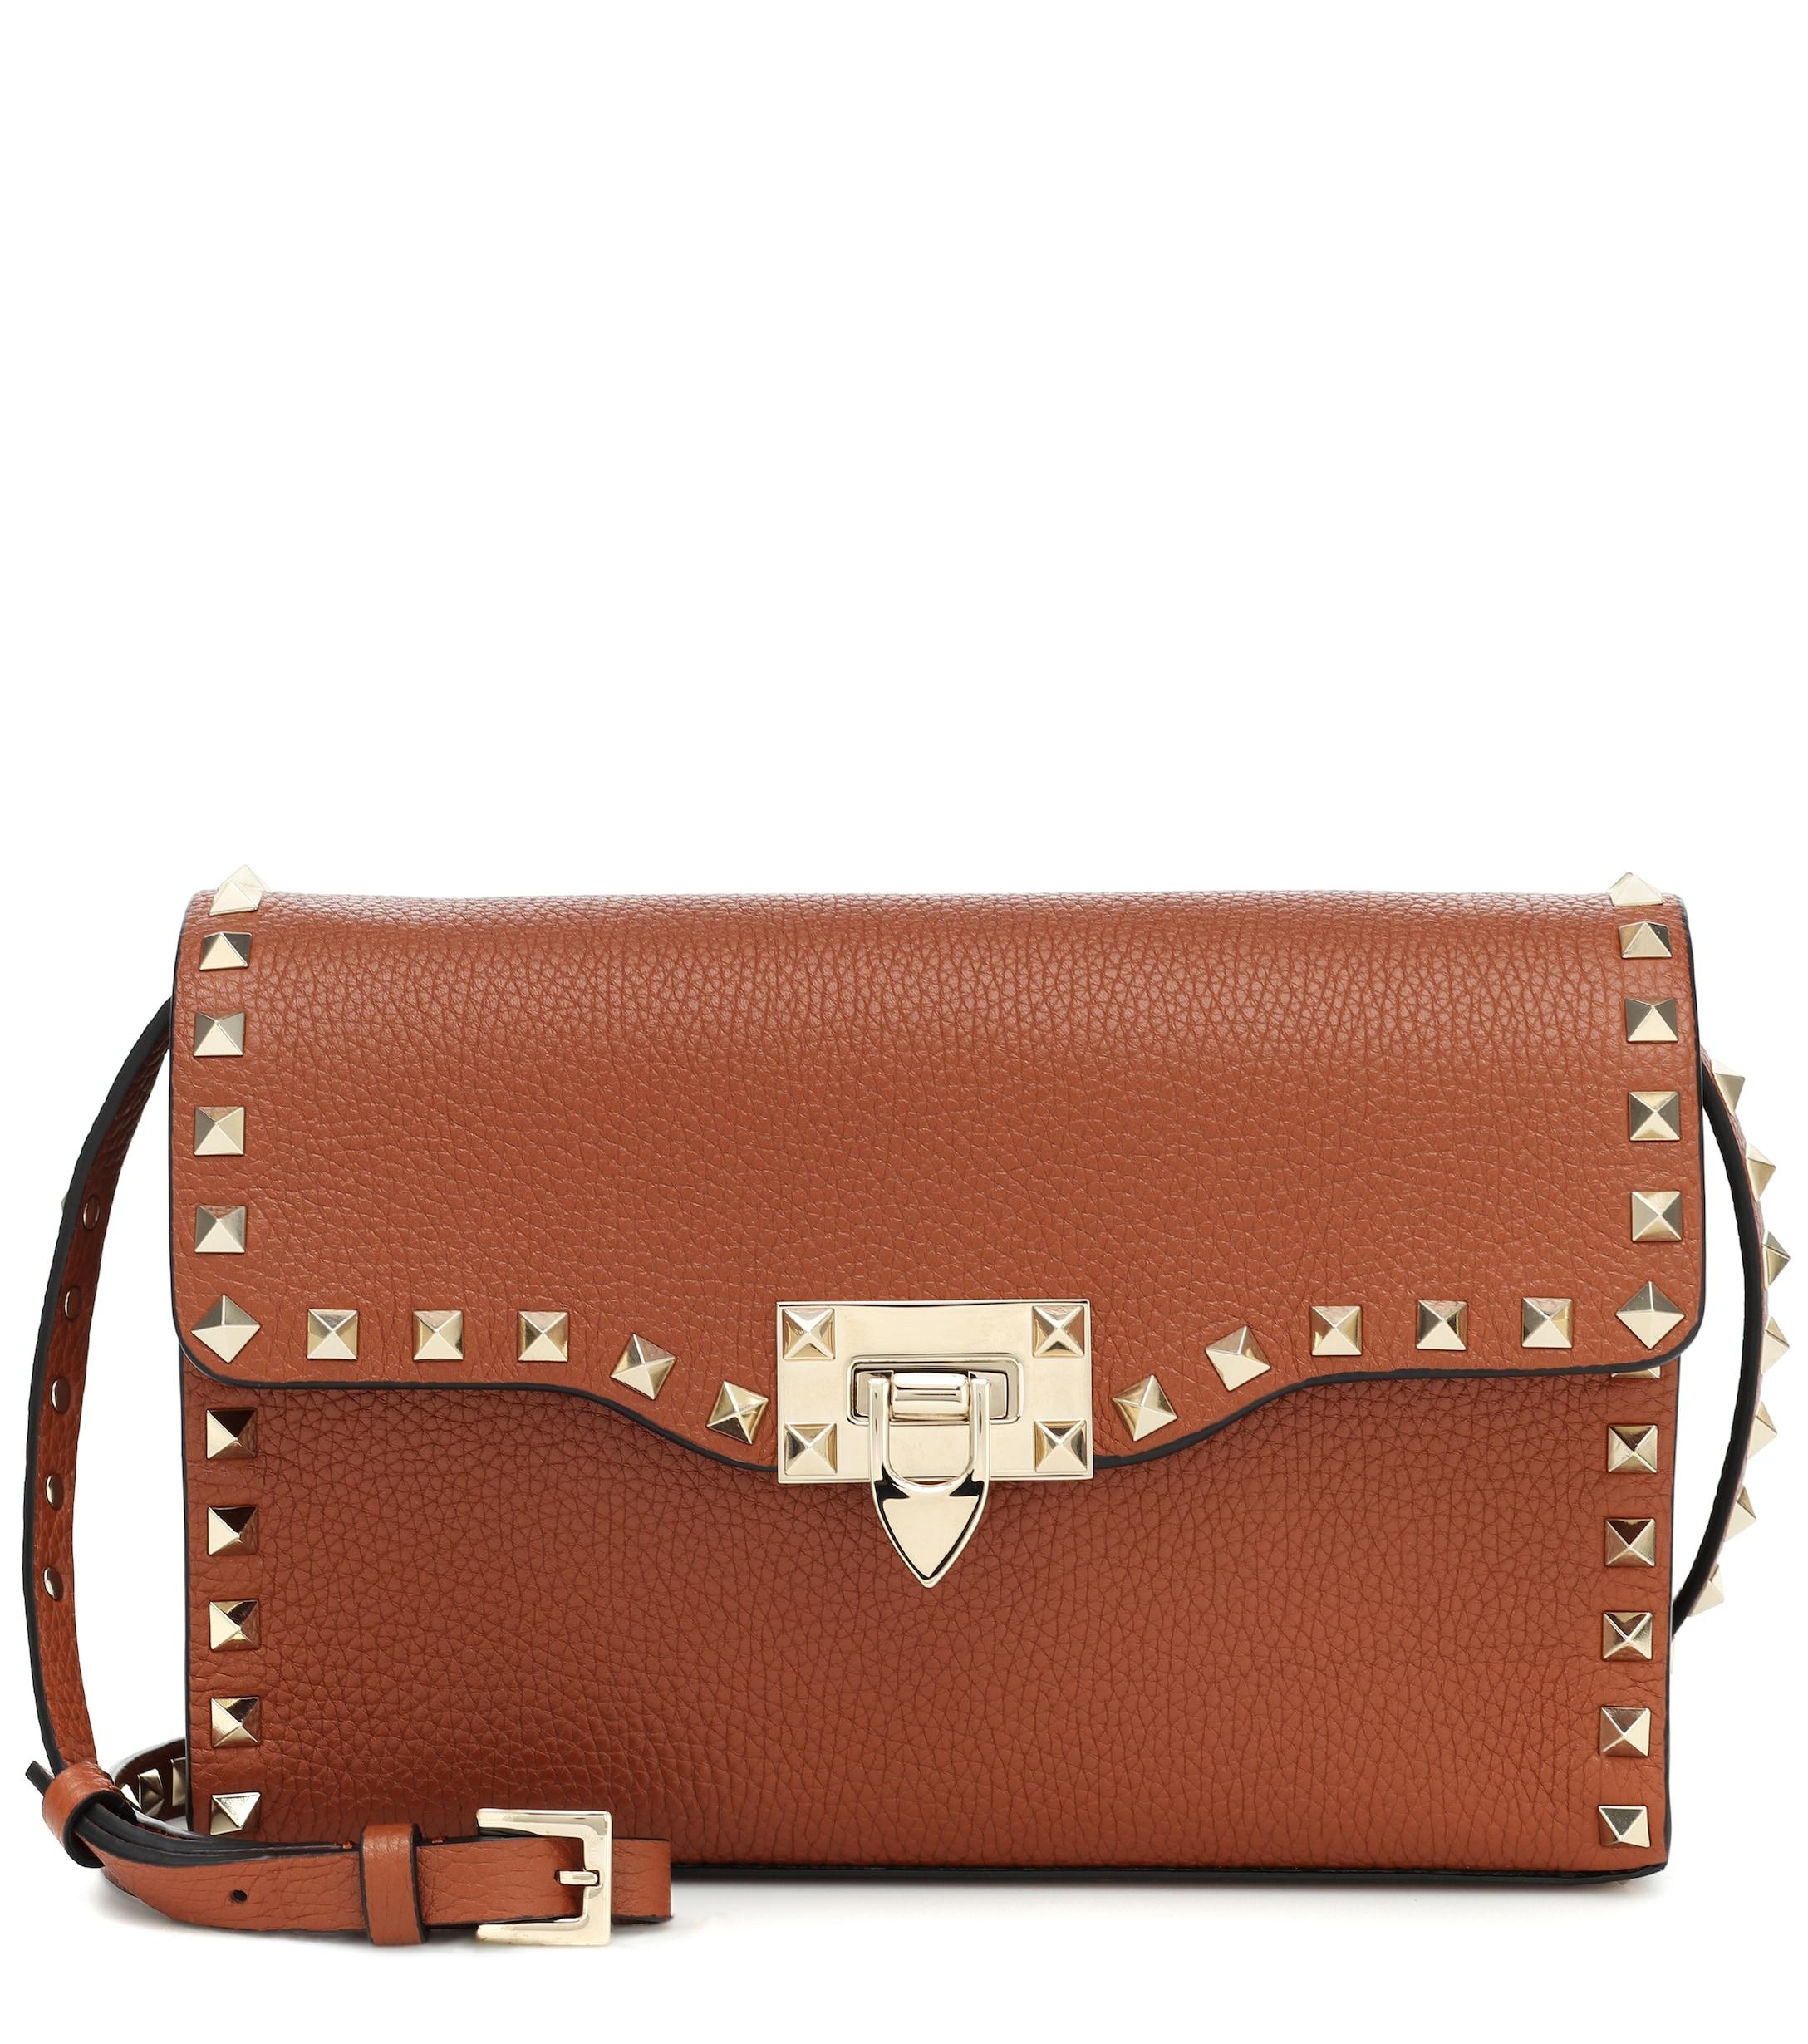 Valentino Garavani Rockstud Small Leather Shoulder Bag in Brown - Lyst